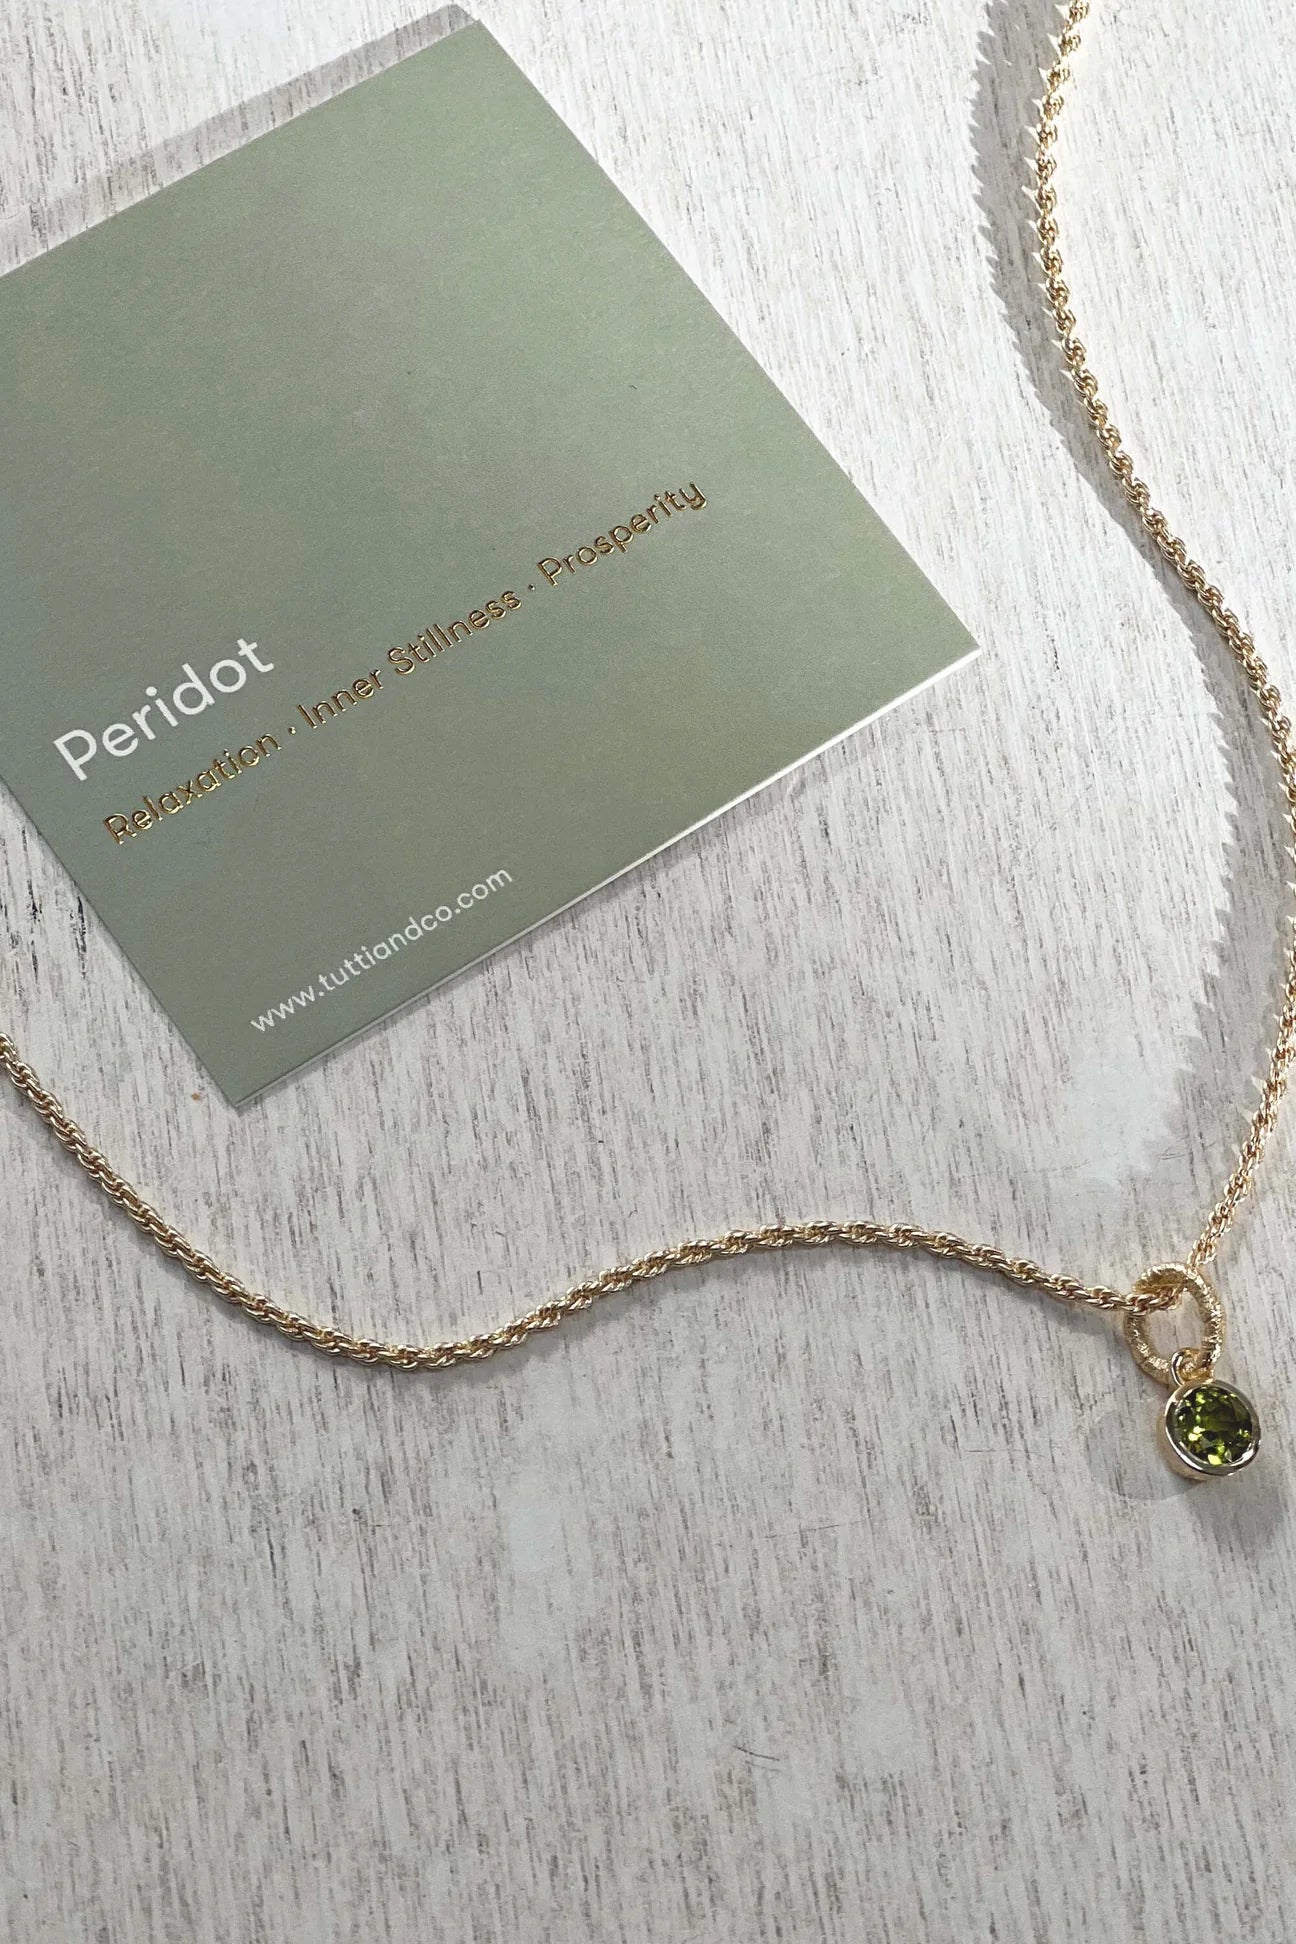 Peridot Birthstone Necklace Gold